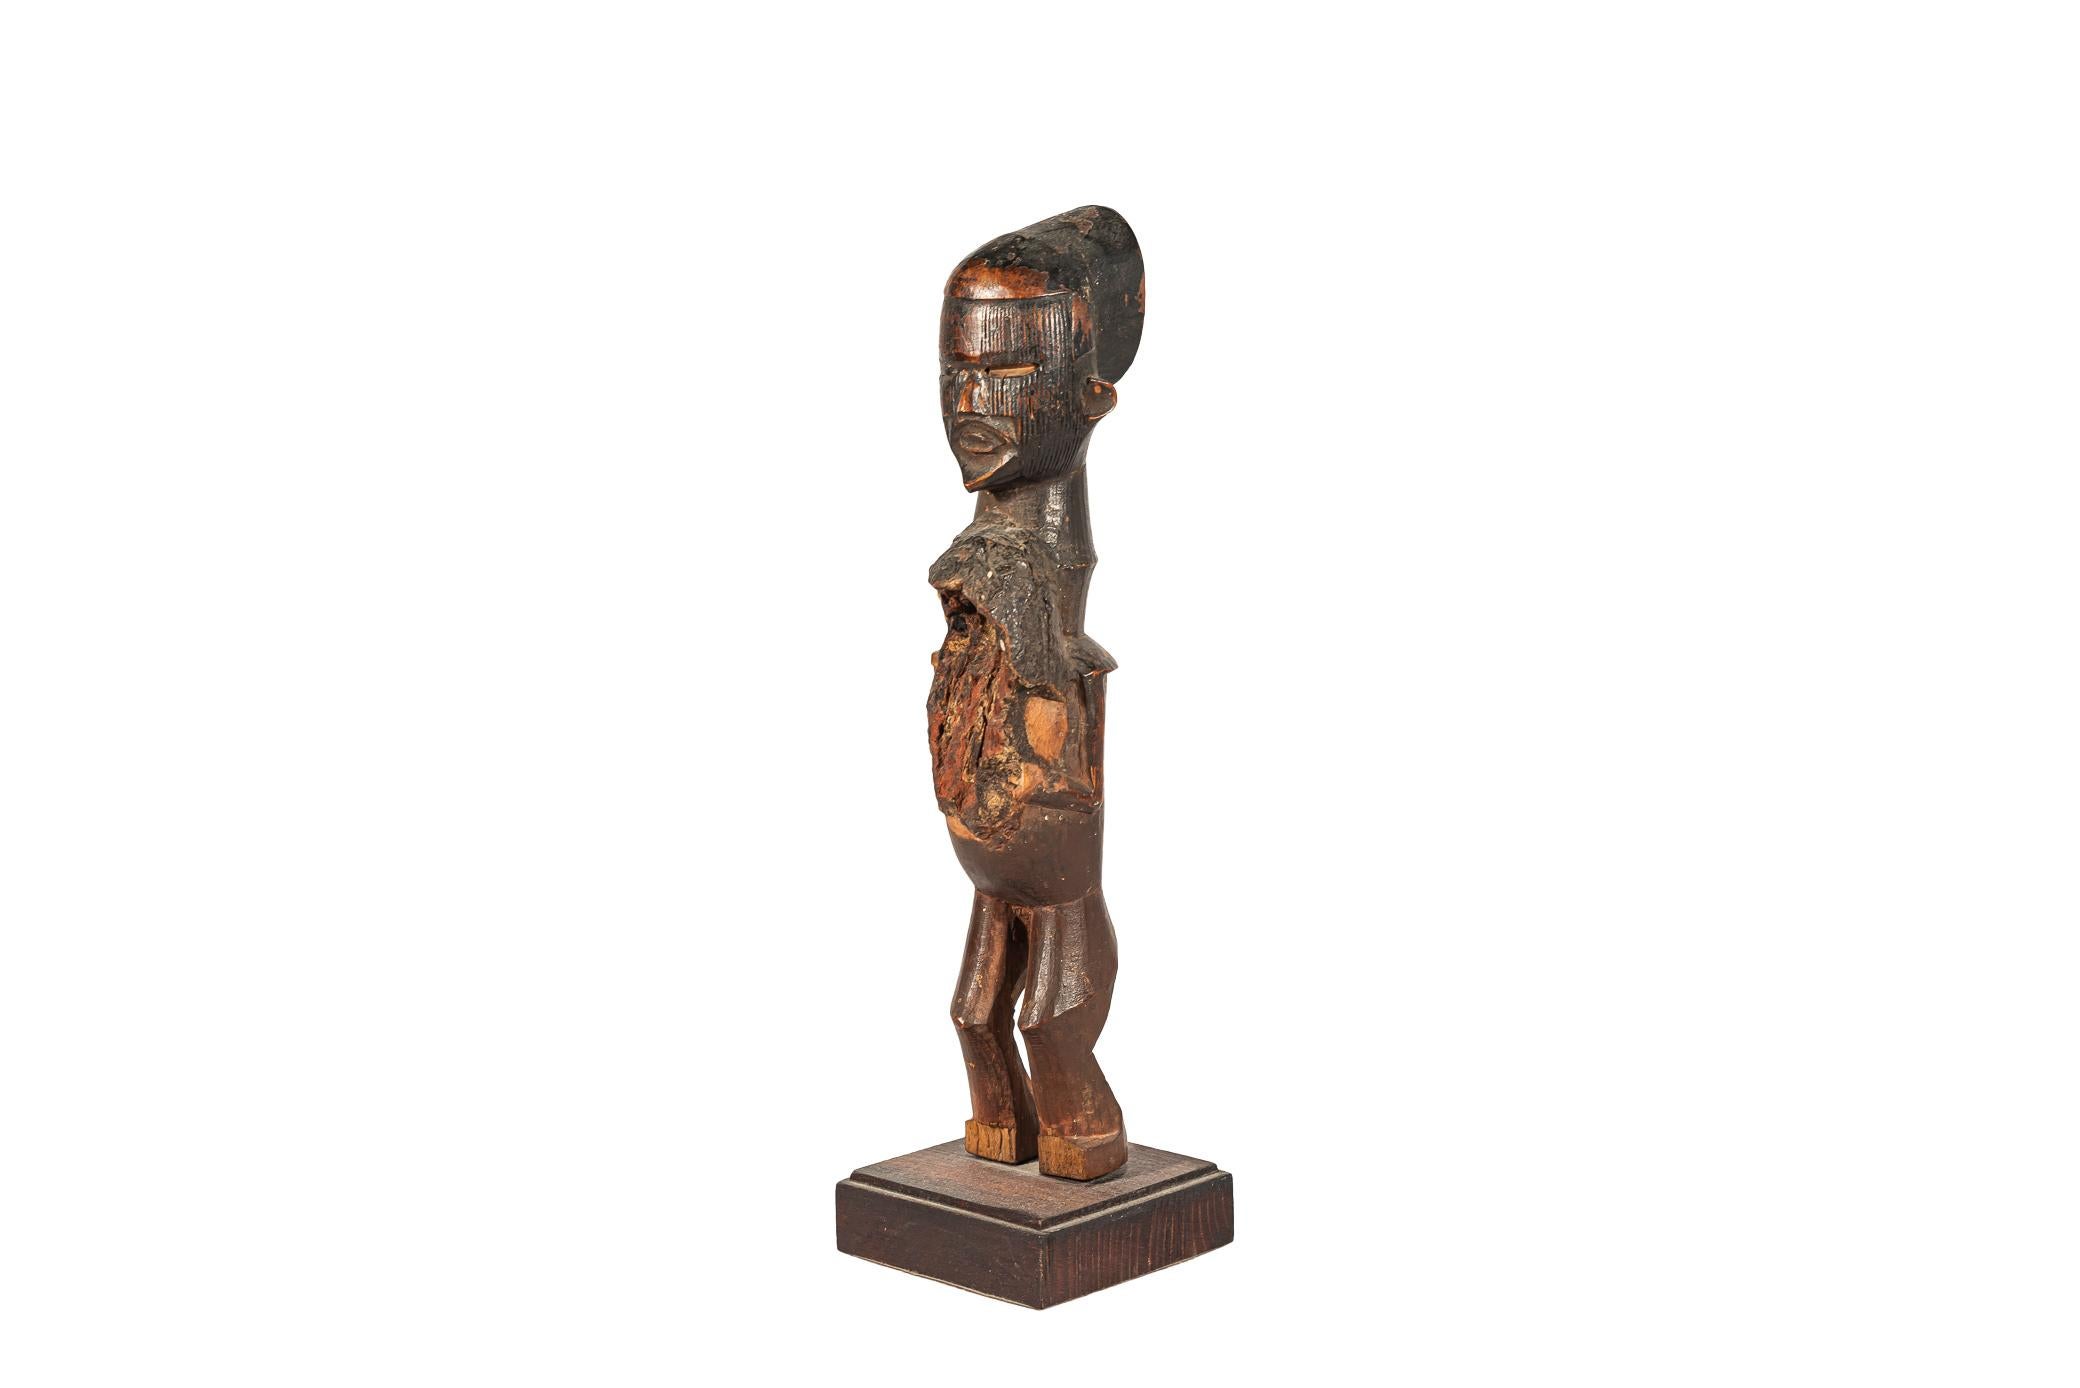 Téké statue,
Wood with brown patina,
Remains of magical substance,
Democratic Republic of the Congo, circa 1940.

Measures: Height 29 cm, depth 7 cm, width 7 cm.

Established between the Democratic Republic of Congo, the Republic of Congo and Gabon,